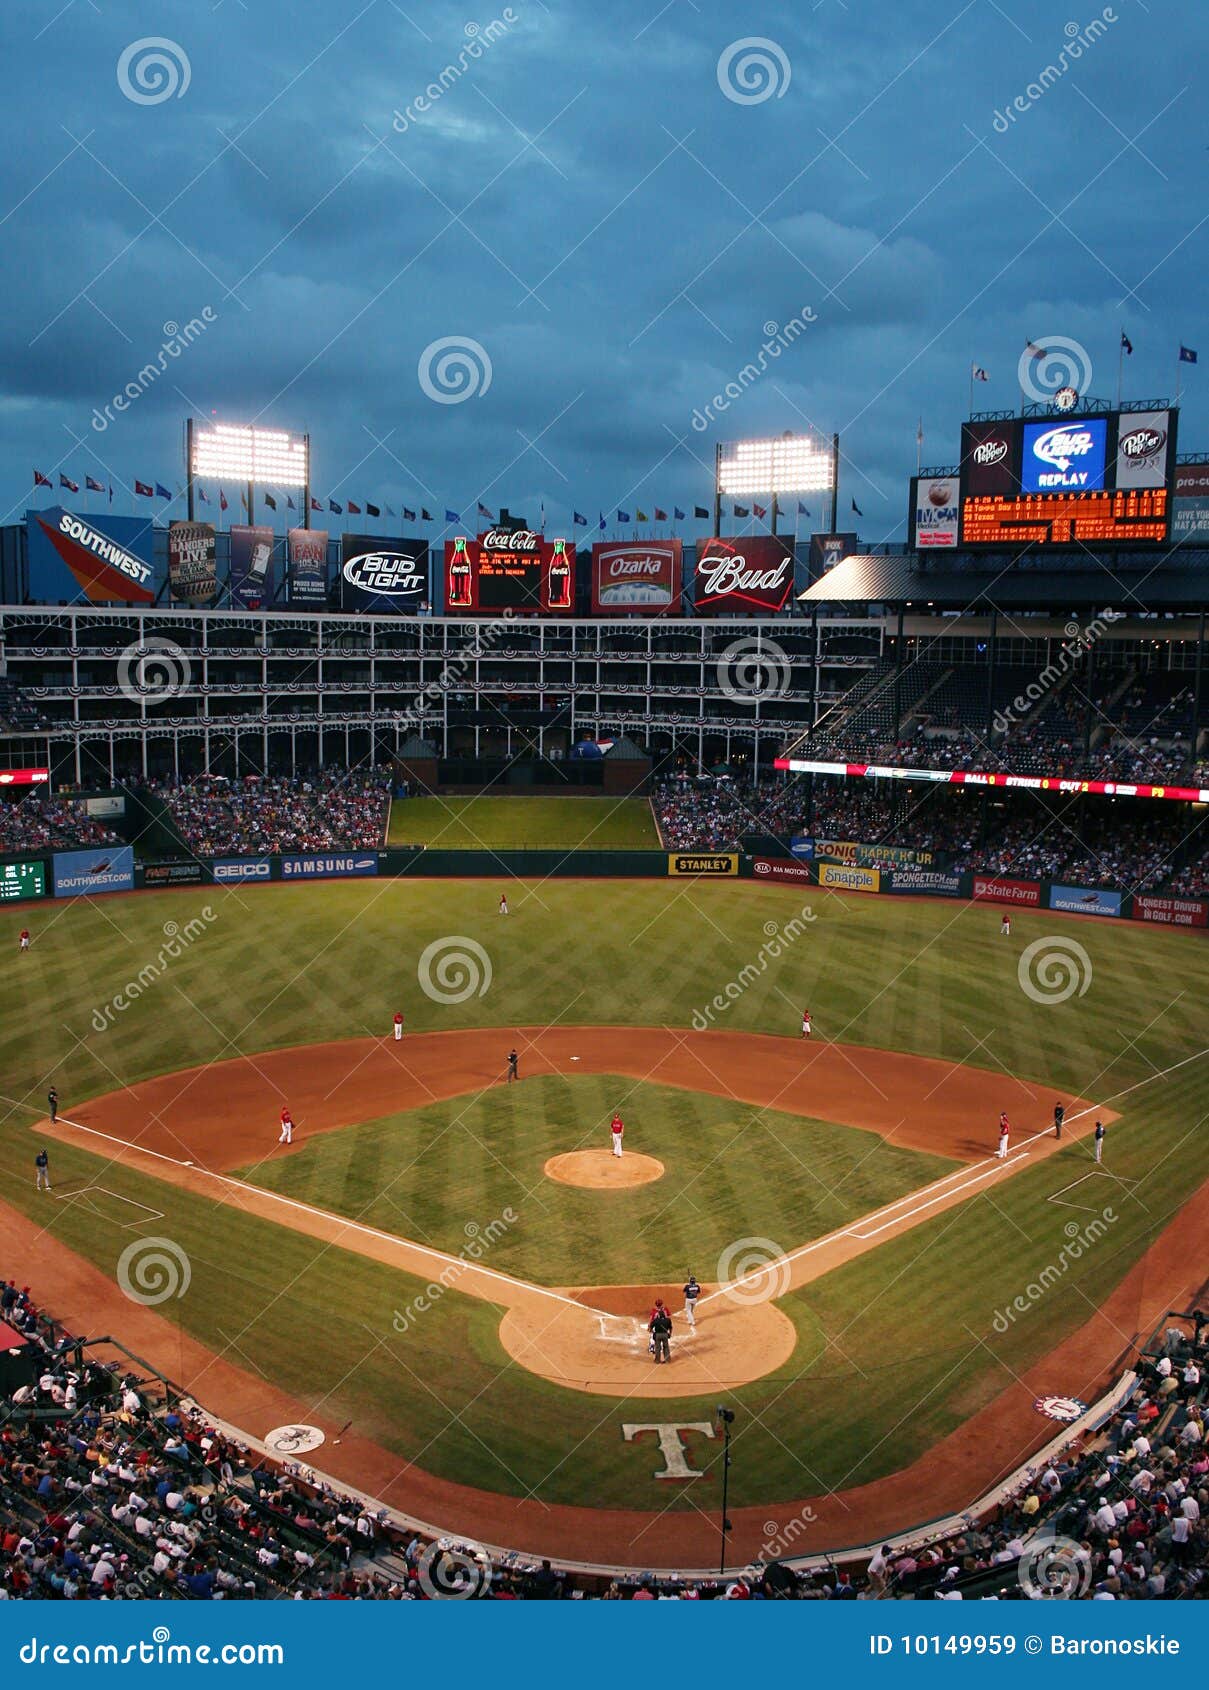 Texas Rangers Baseball Game at Night Editorial Stock Image - Image